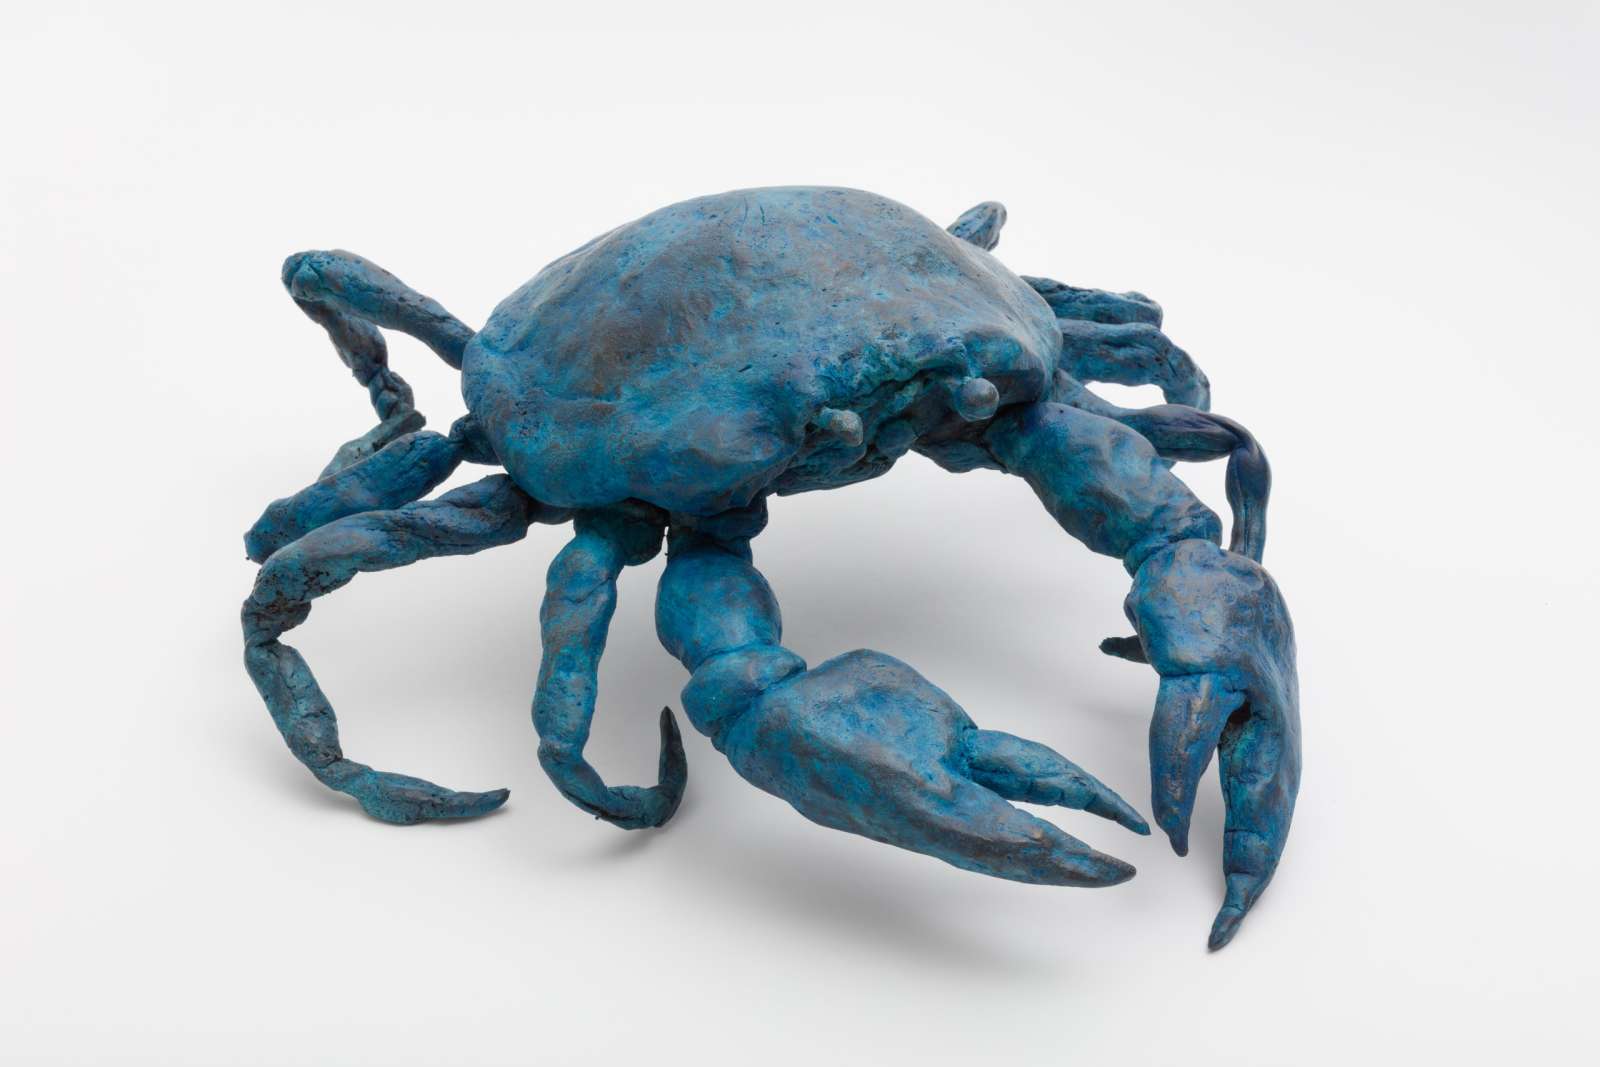 Francis Upritchard, Big Crab, 2020, Balata / bronze, 13 x 34 x 39 cm, Photo Angus Mill, Courtesy the artist and Kate MacGarry